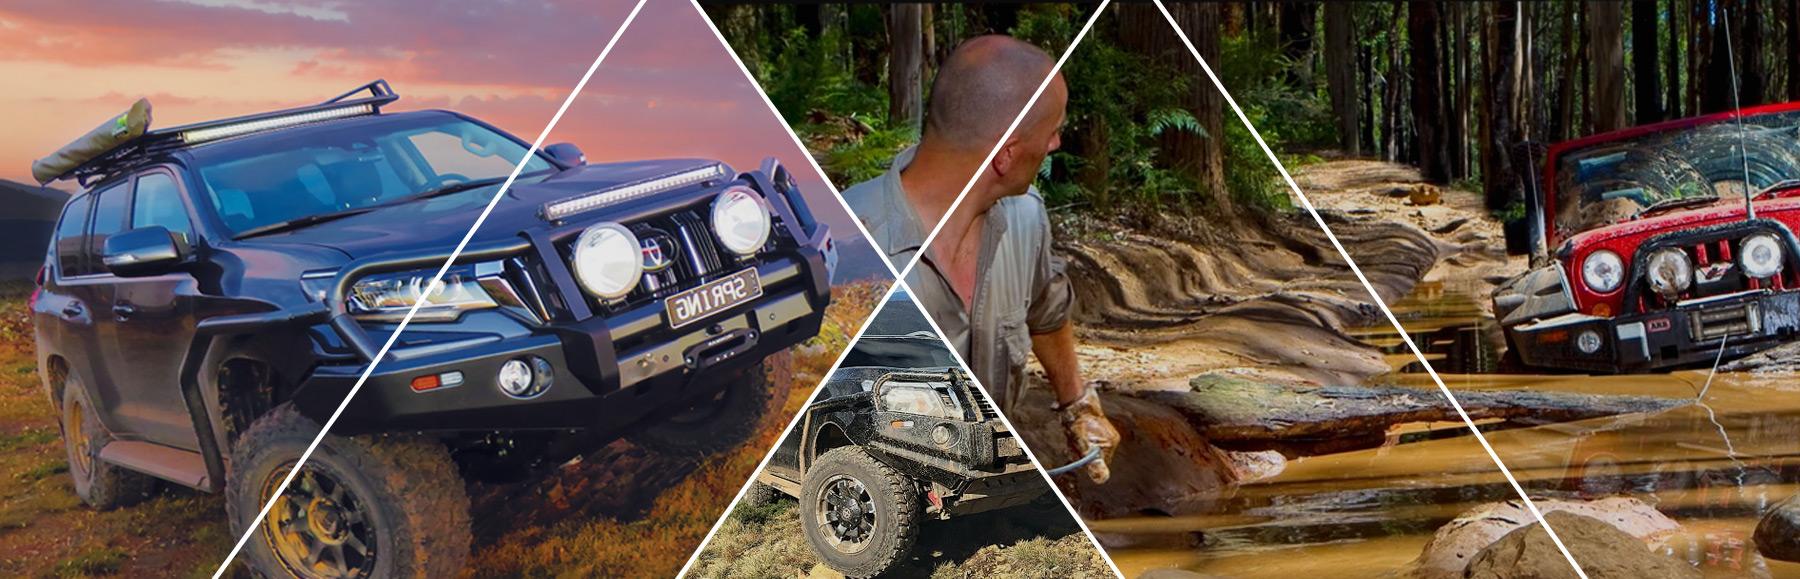 Cambodia 4x4WD Adventure Tour- 12 Days